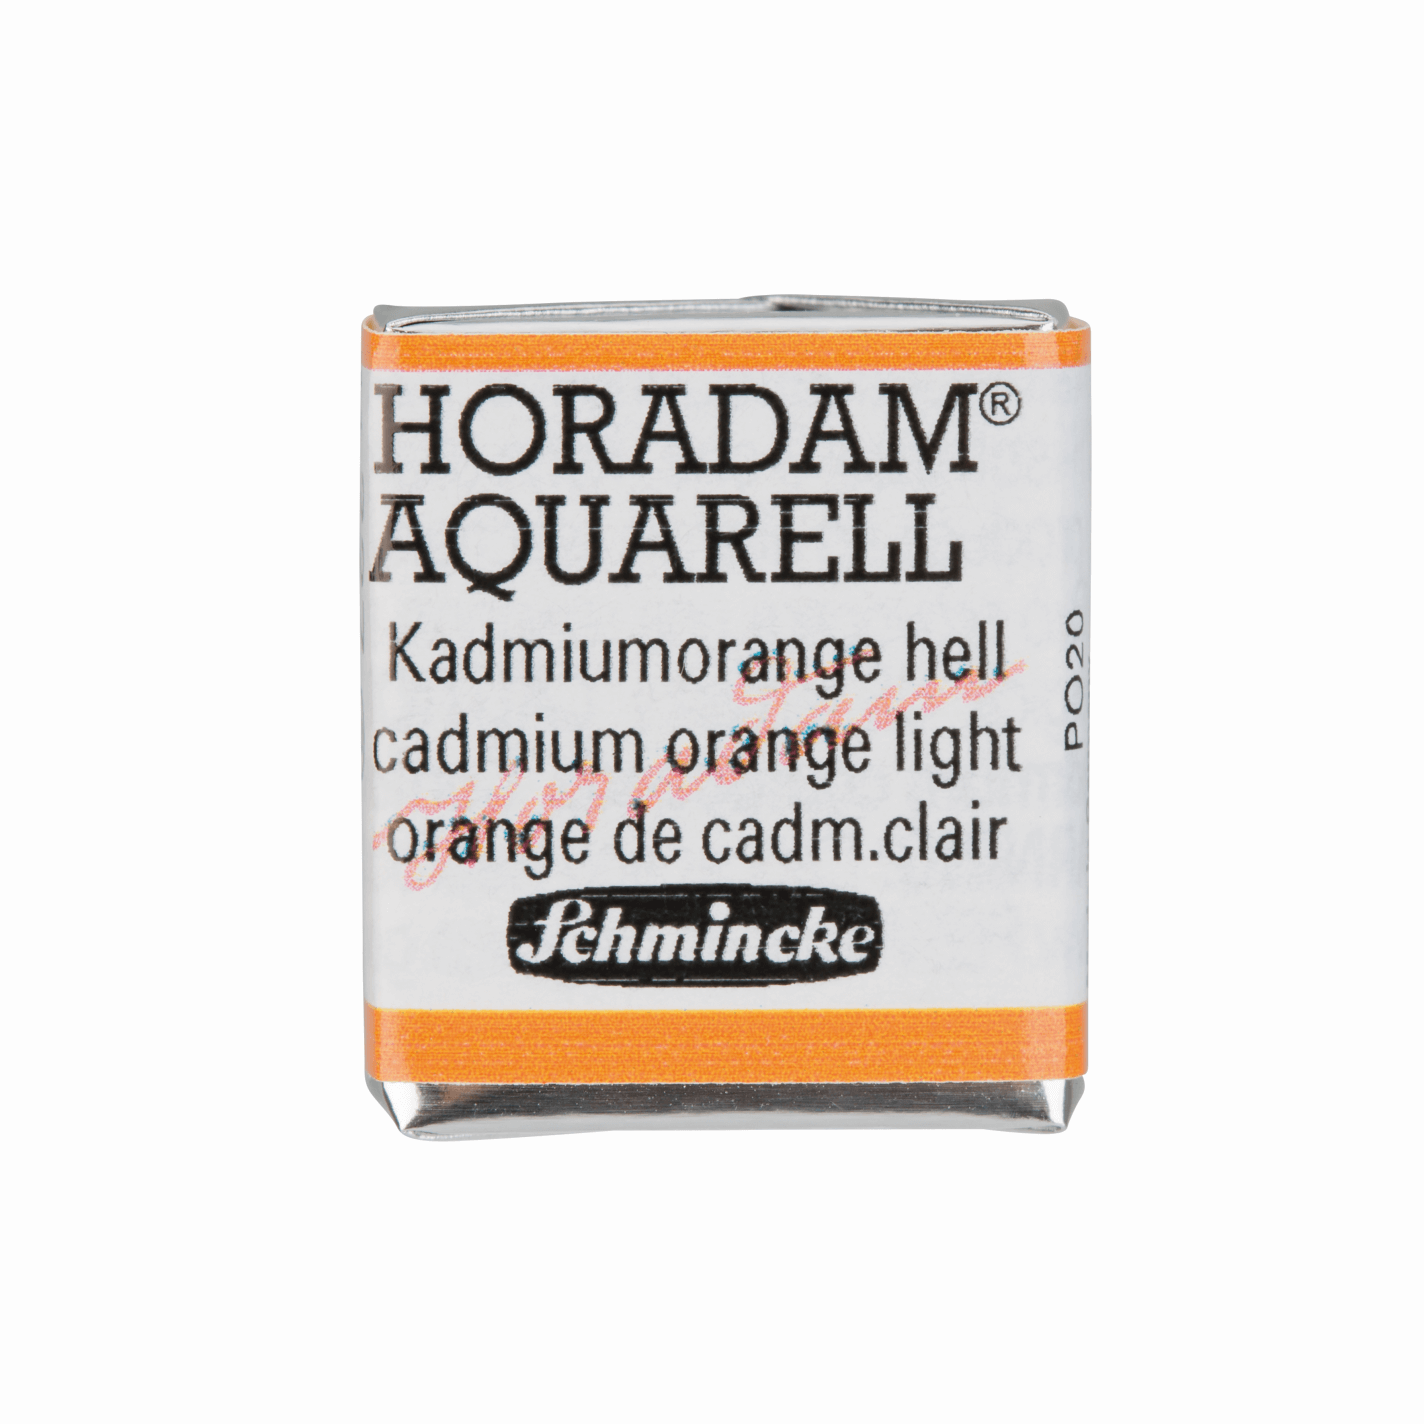 Schmincke Horadam Aquarell pans 1/2 pan Cadmium Orange Light